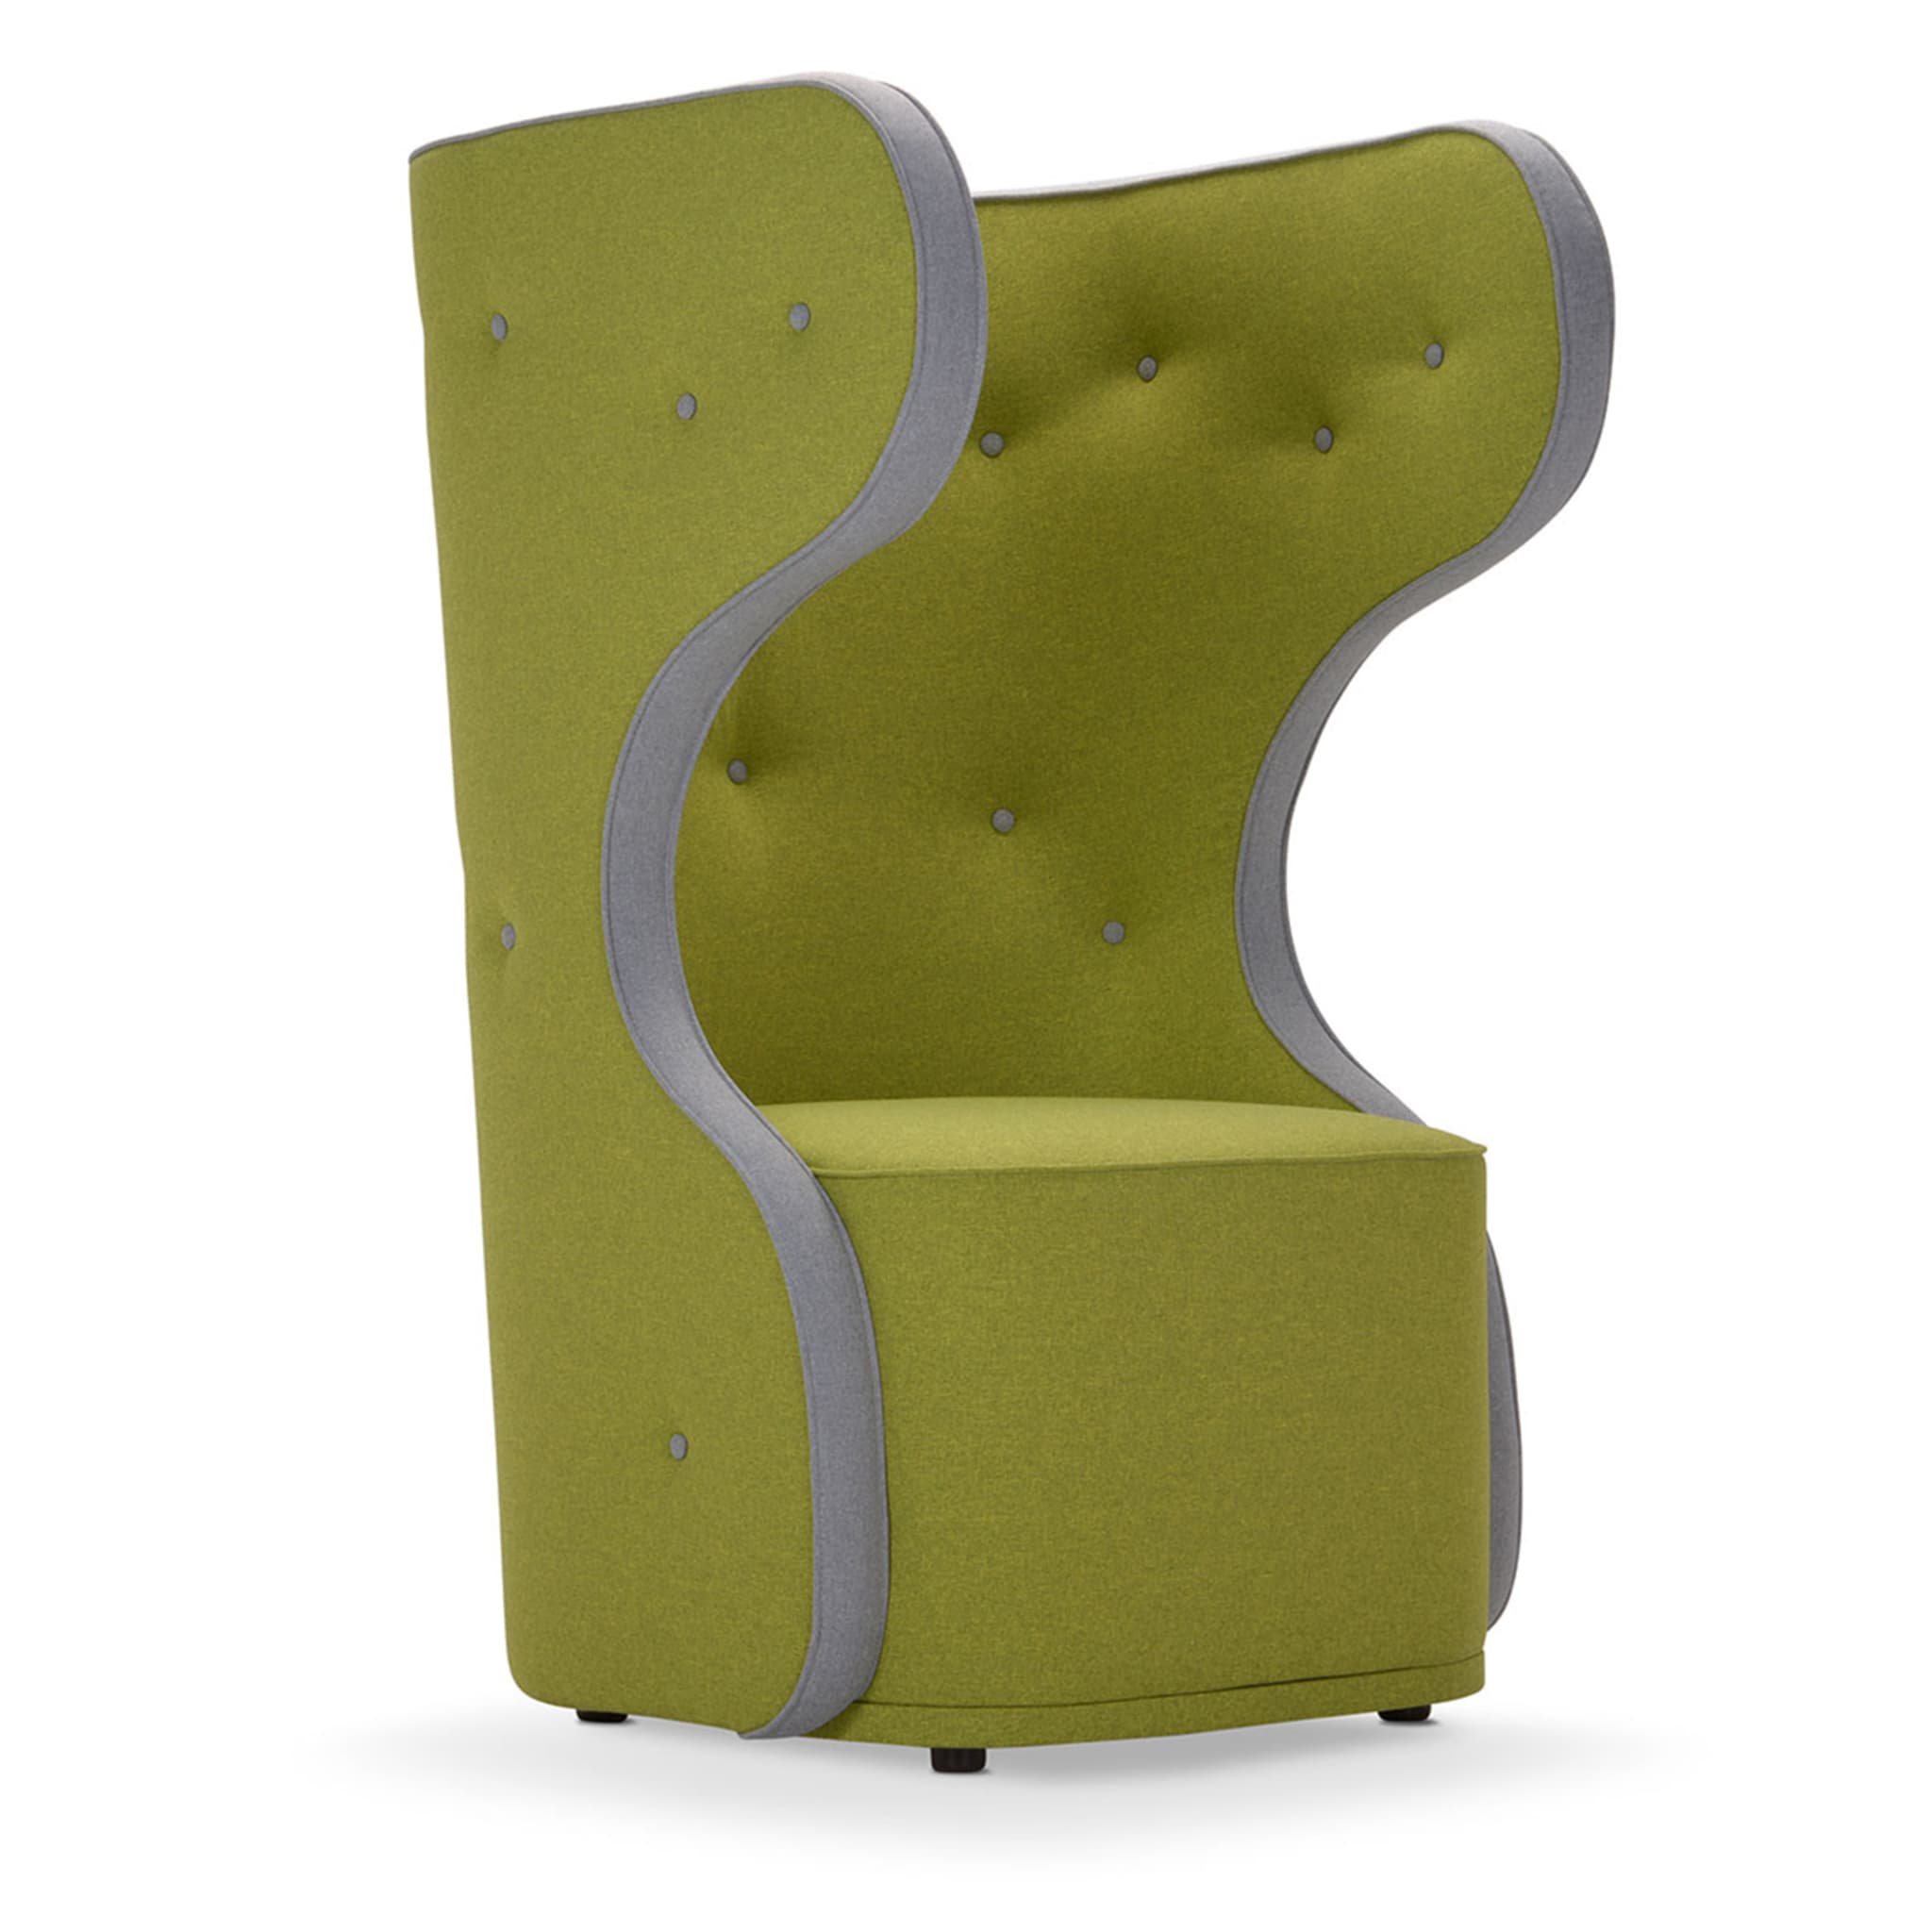 Wow Green & Gray Armchair by Simone Micheli - Alternative view 3